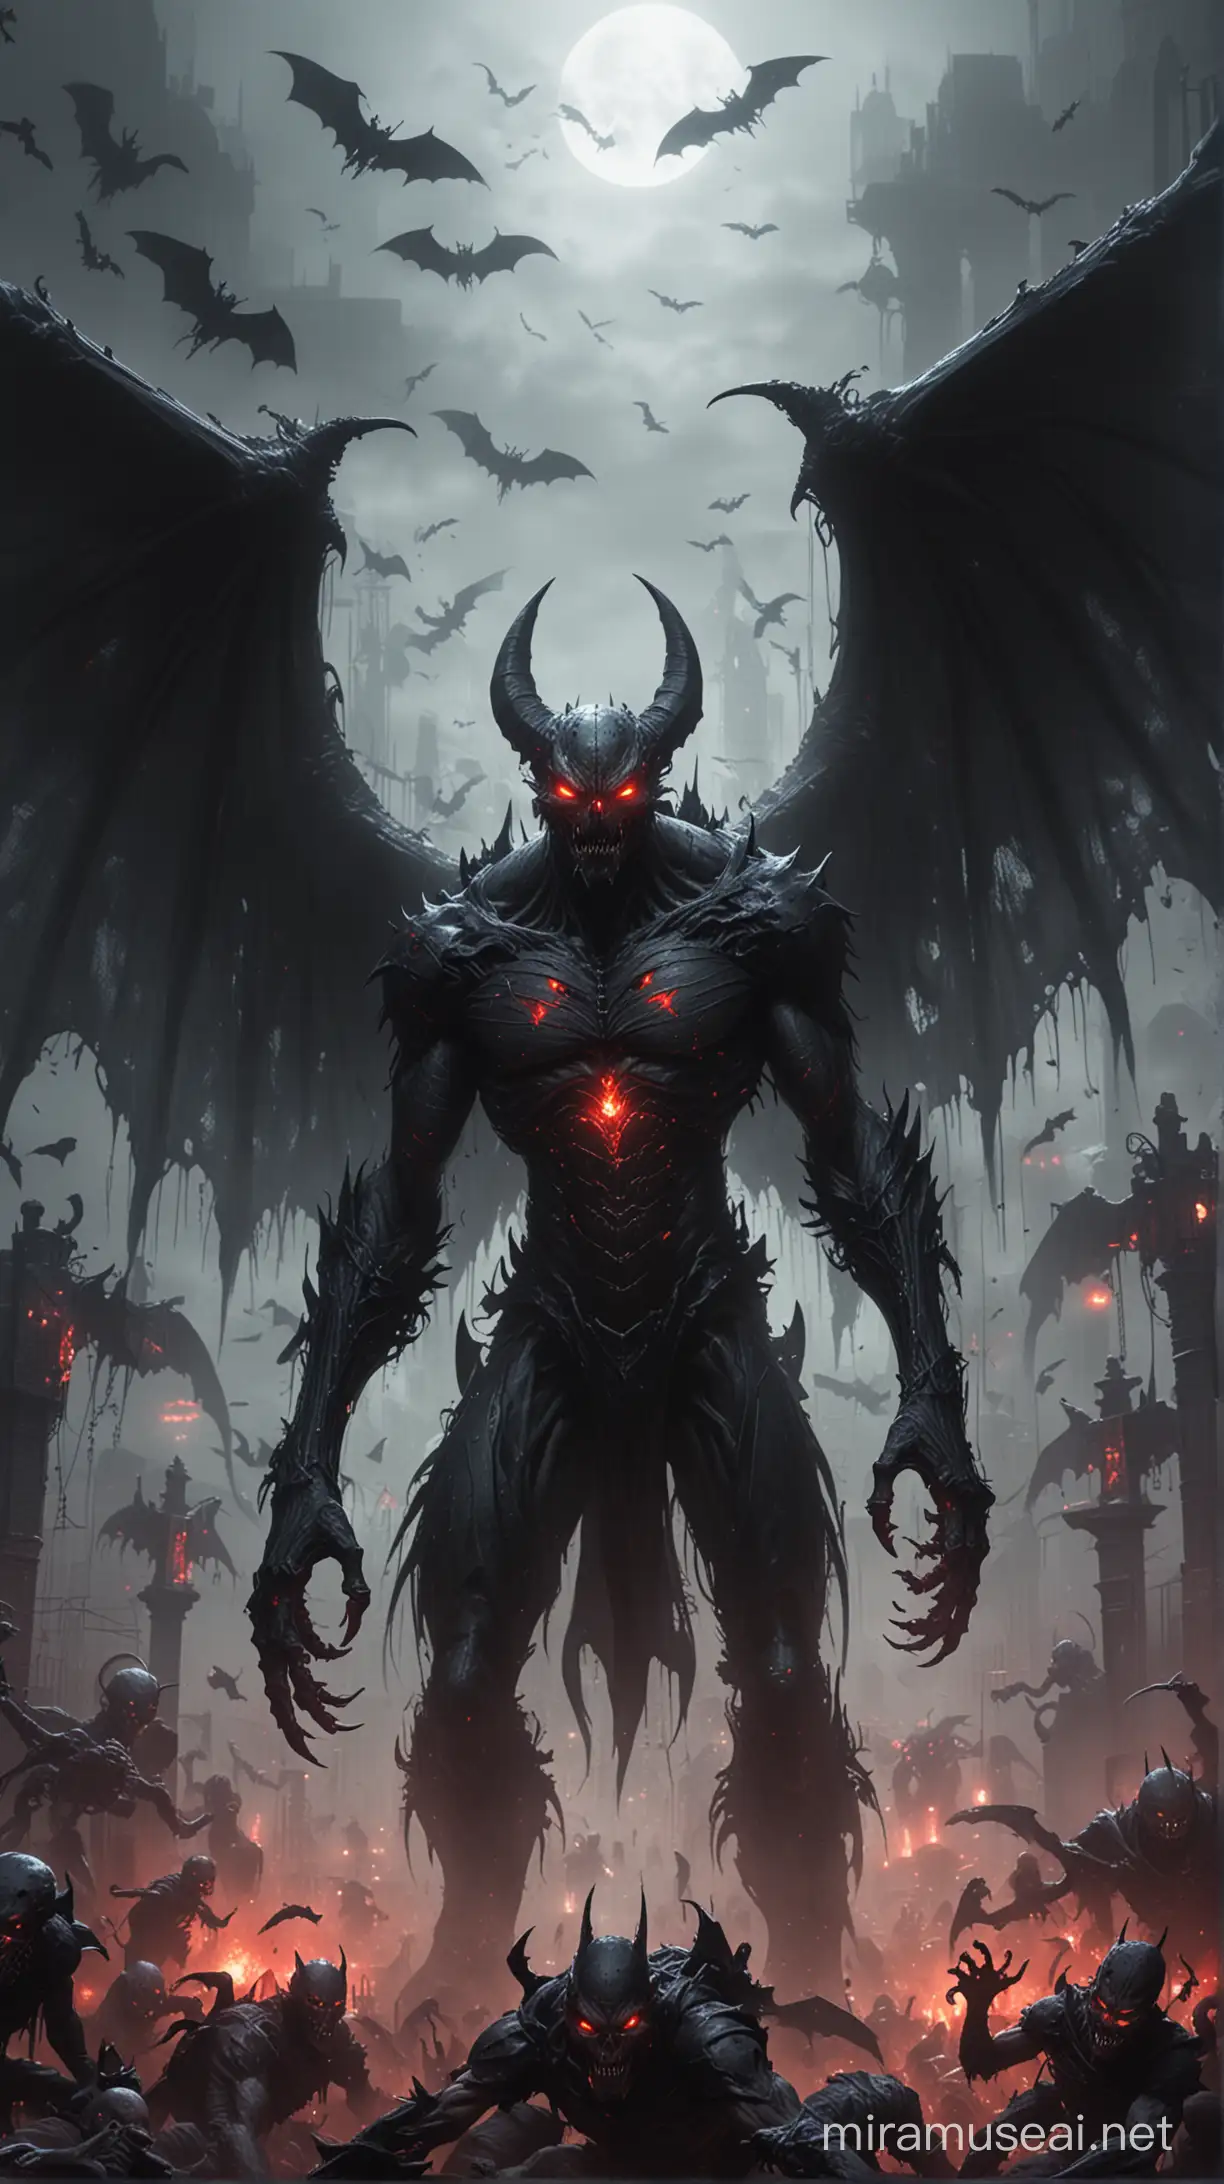 Ominous BatLike Winged Monster in Foggy Graveyard with Demon Zombies